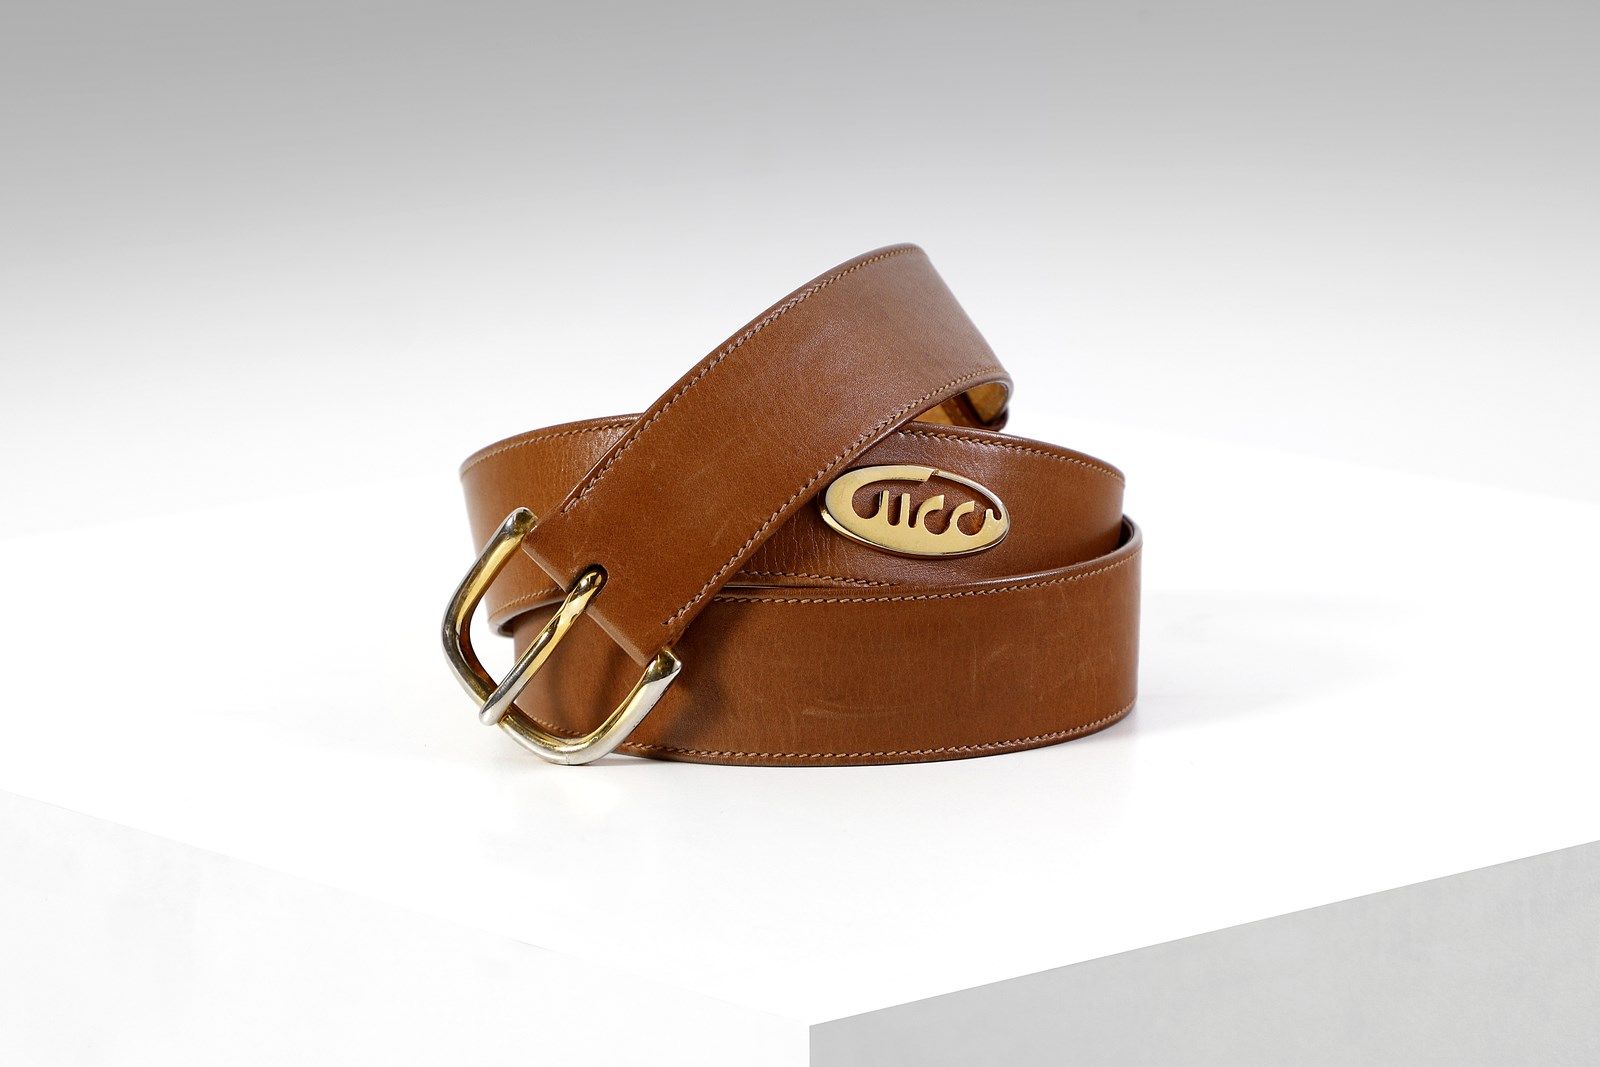 GUCCI Tan leather belt with gold buckle. Late 80's. Brauner Ledergürtel mit gold&hellip;